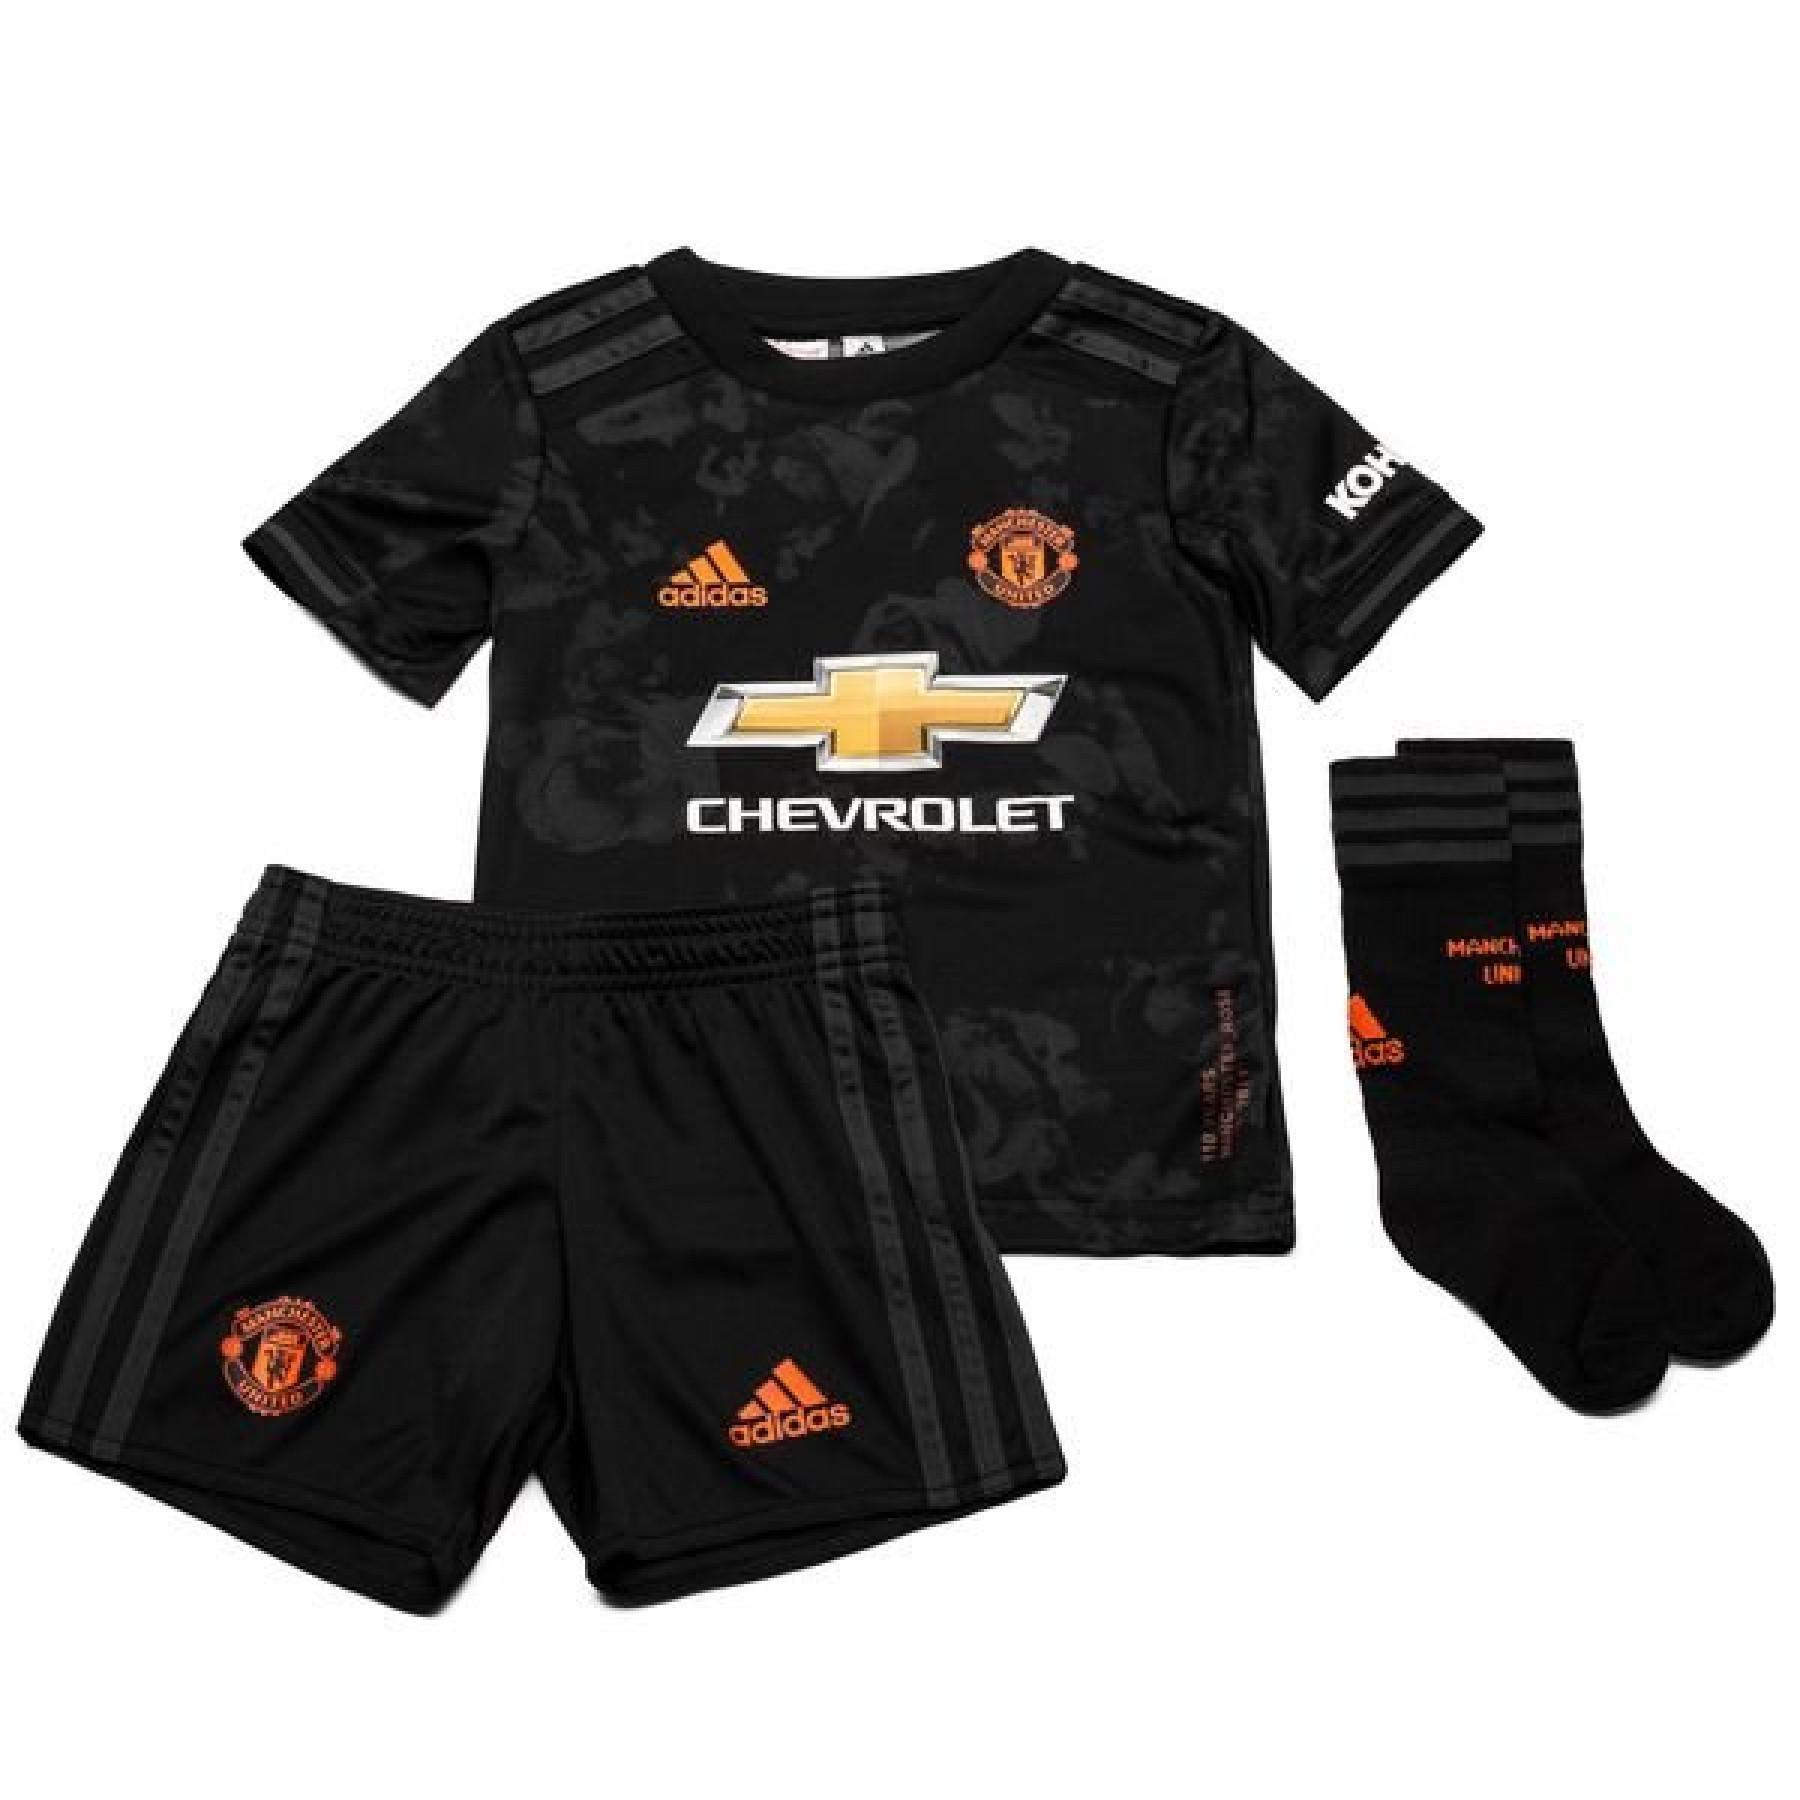 Mini-kit trzeci Manchester United 2019/20